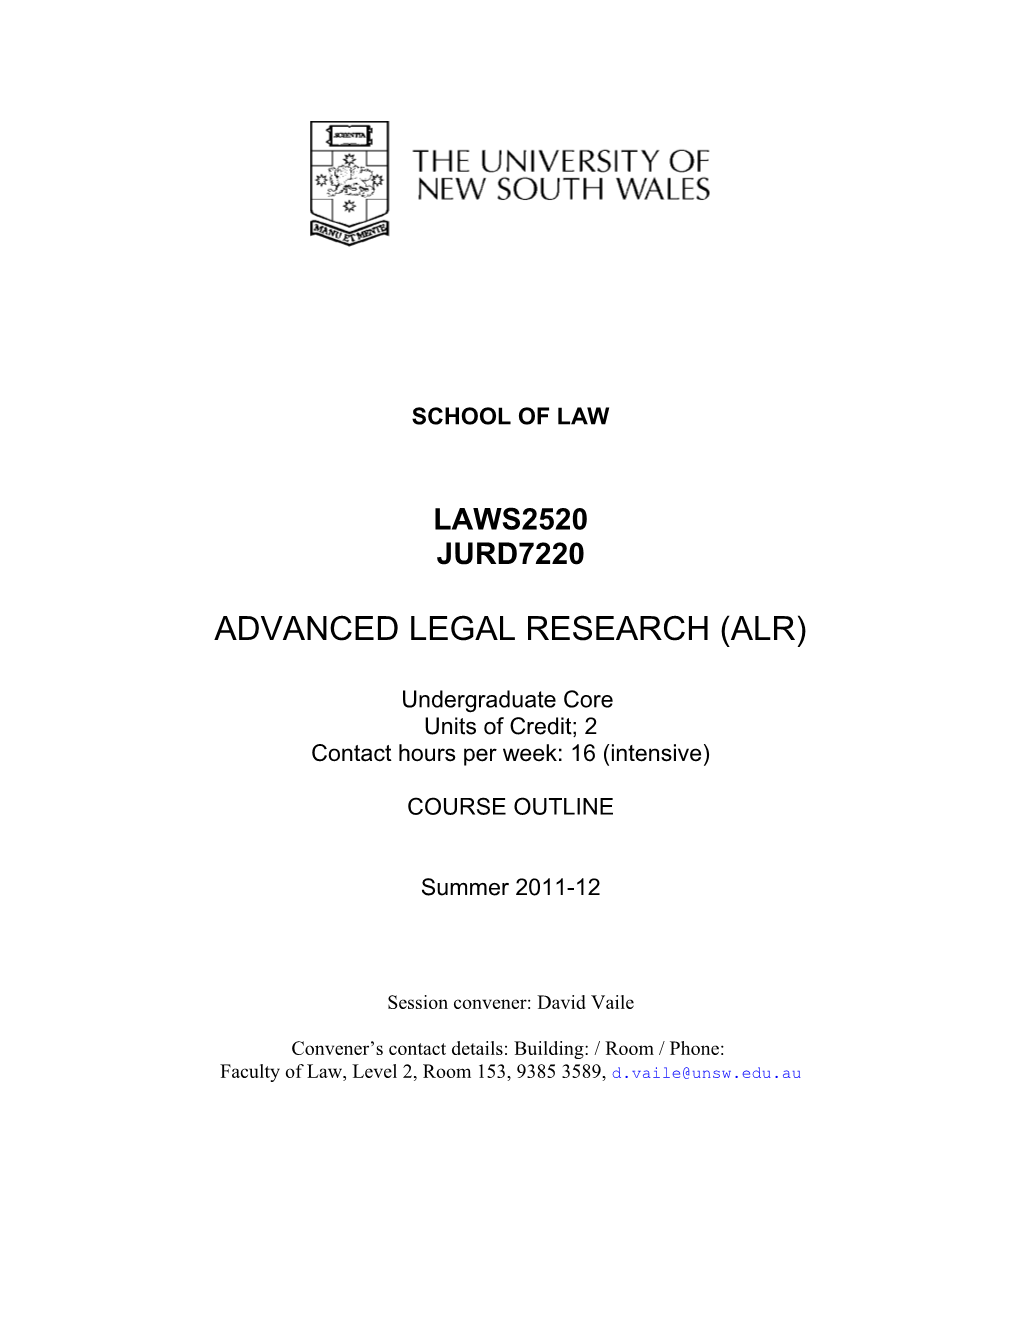 Advanced Legal Research (Alr)